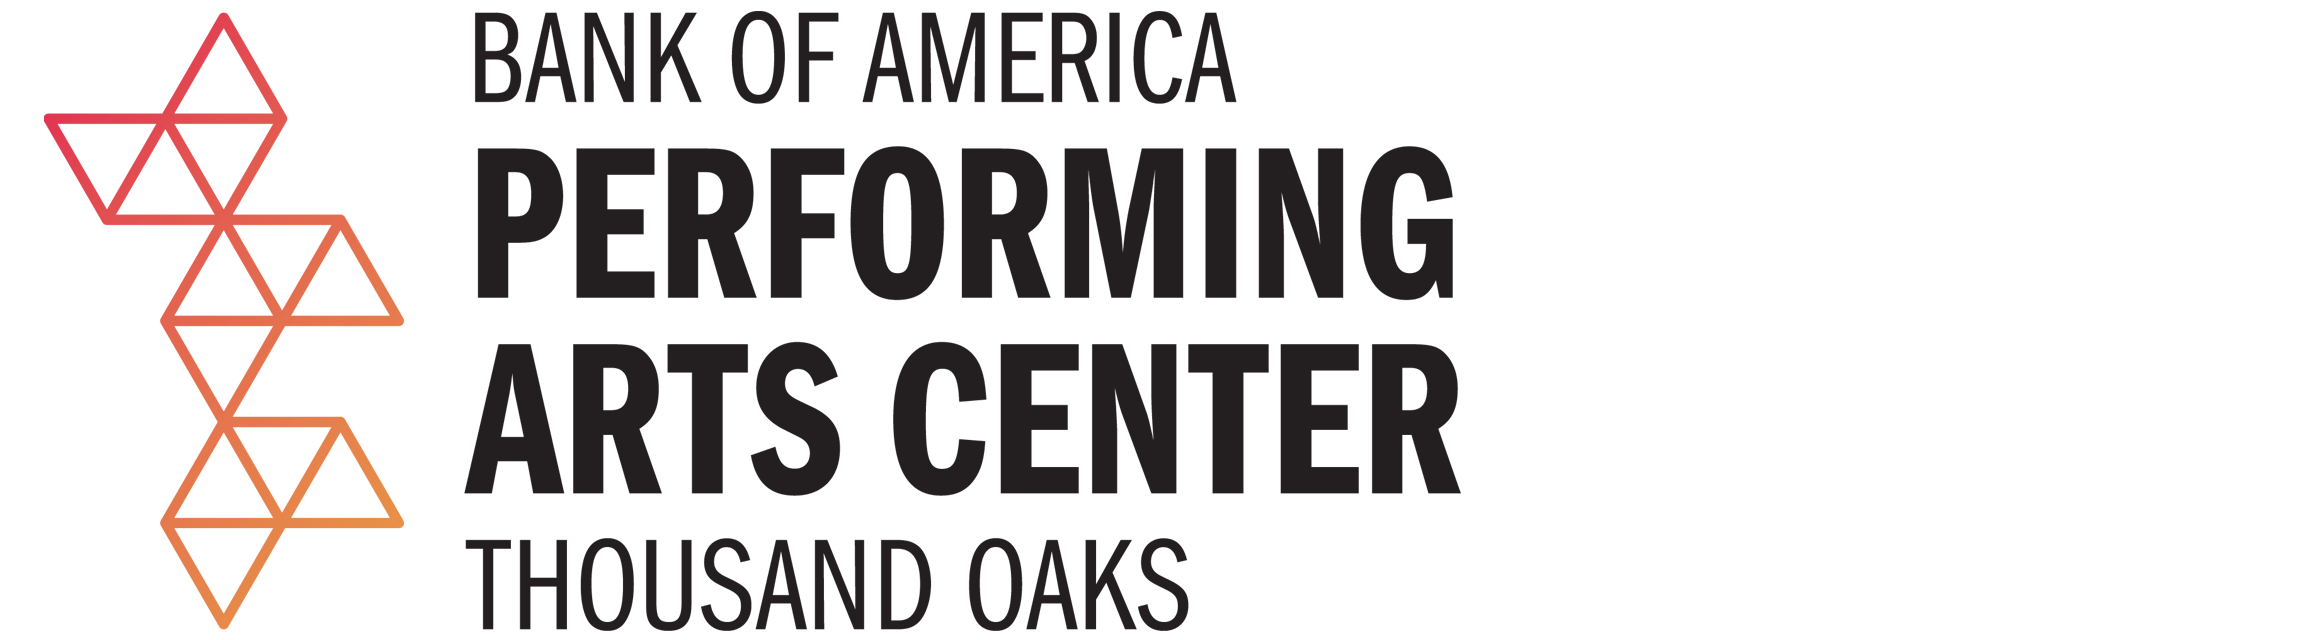 Bank of America Performing Arts Center Thousand Oaks Belinda Carlisle